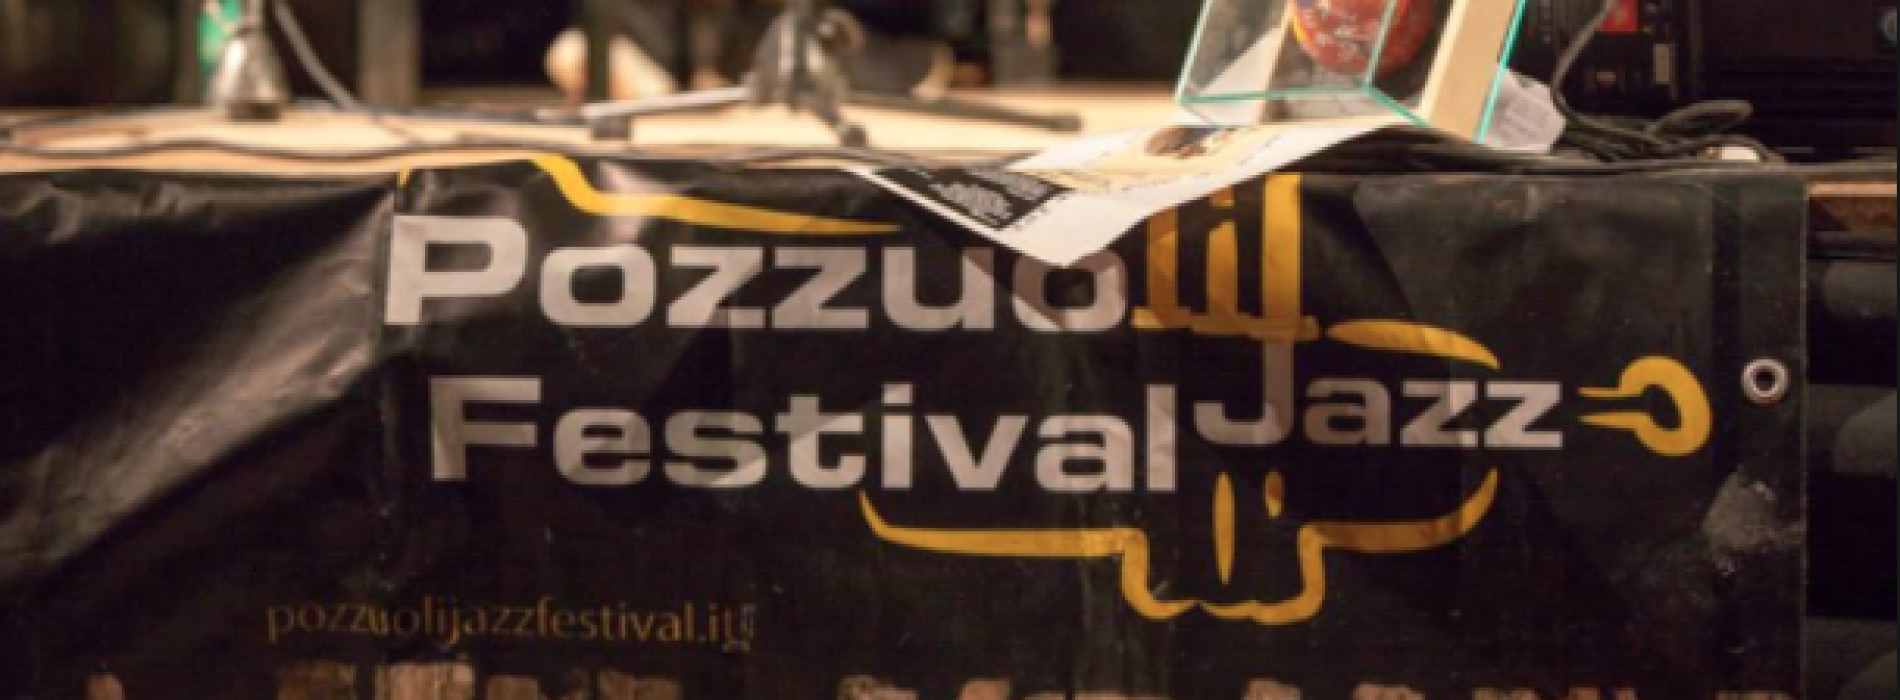 Il Pozzuoli Jazz Festival ritorna nei siti archeologici flegrei